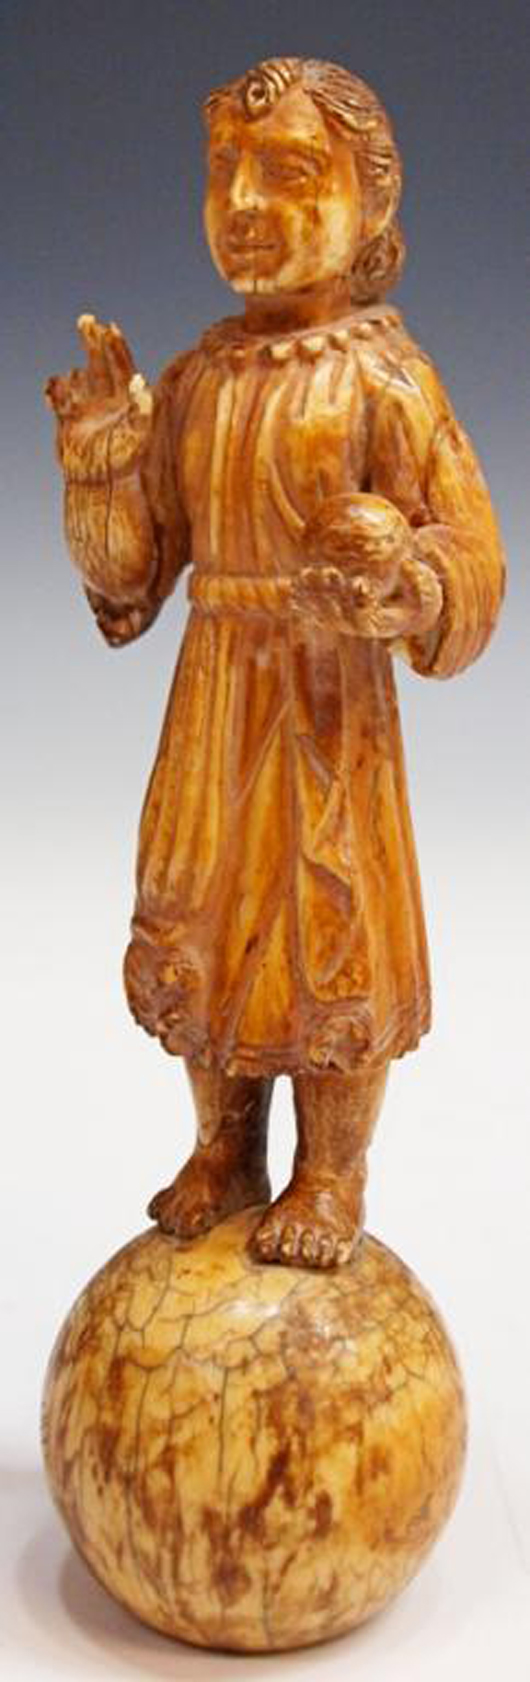 Seventeenth-century Indo-Portuquese ivory Christ Child (estimate $1,200-$1,500). Image courtesy of Austin Auction Gallery.